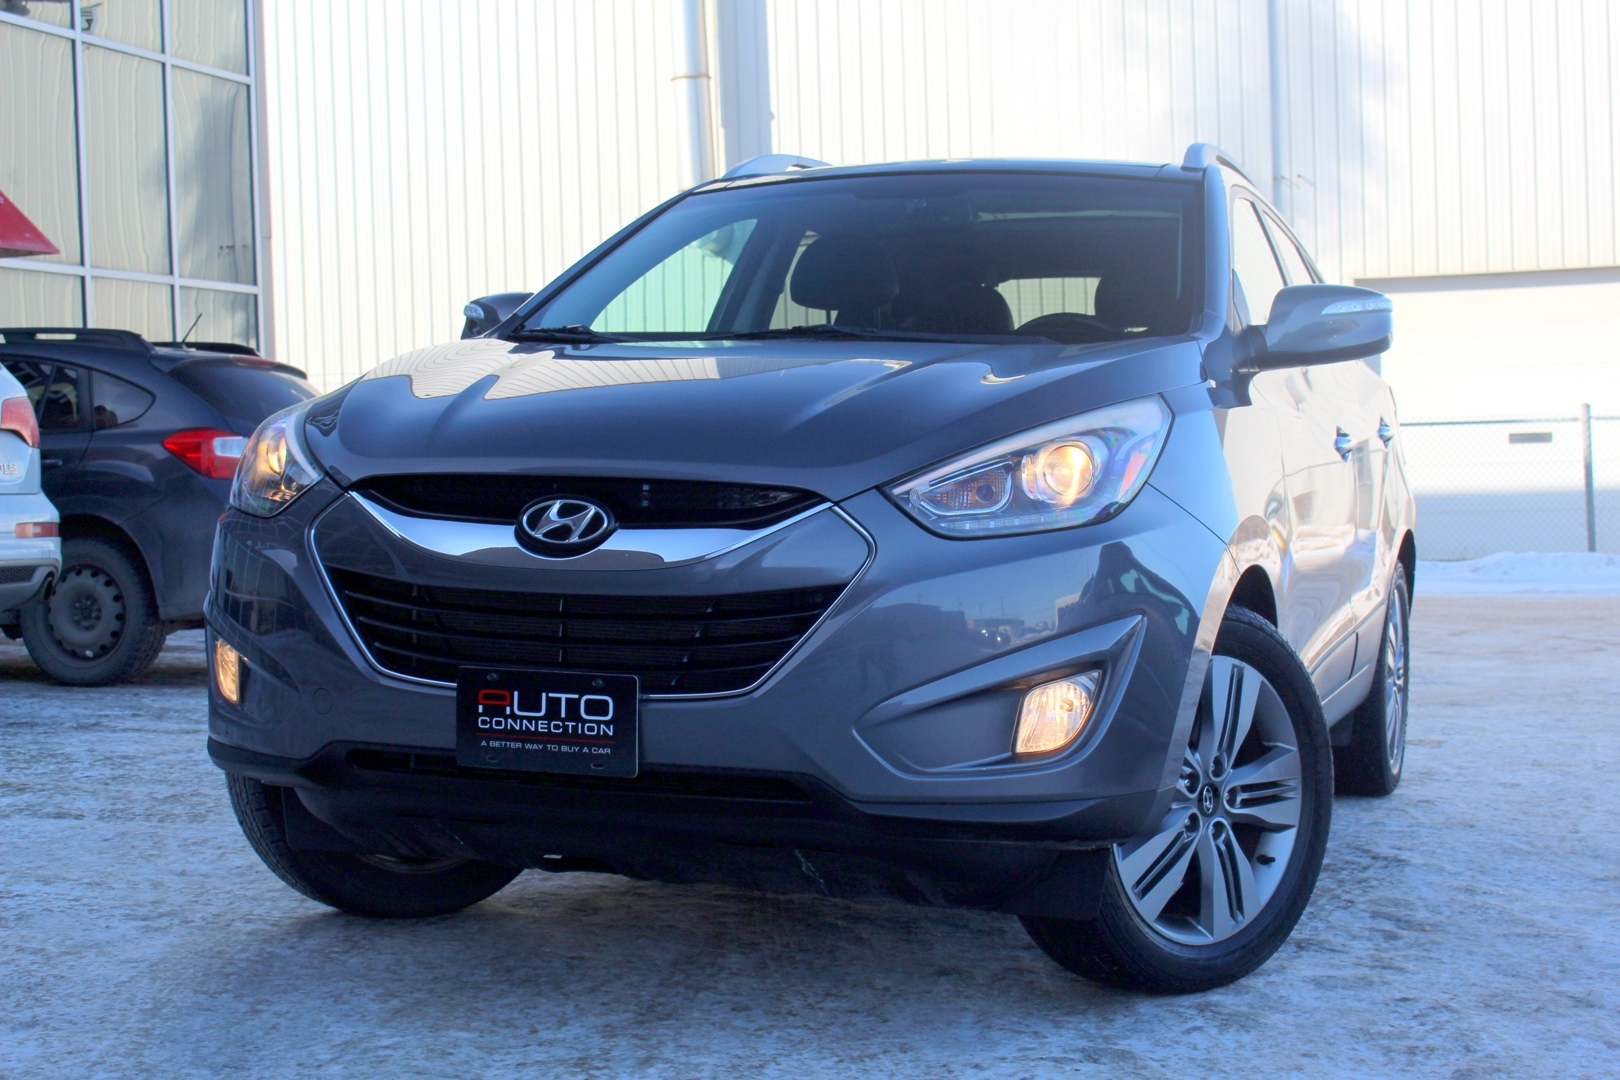 2015 Hyundai Tucson Limited - AWD - TECH PKG. - NAV - LOW KMS